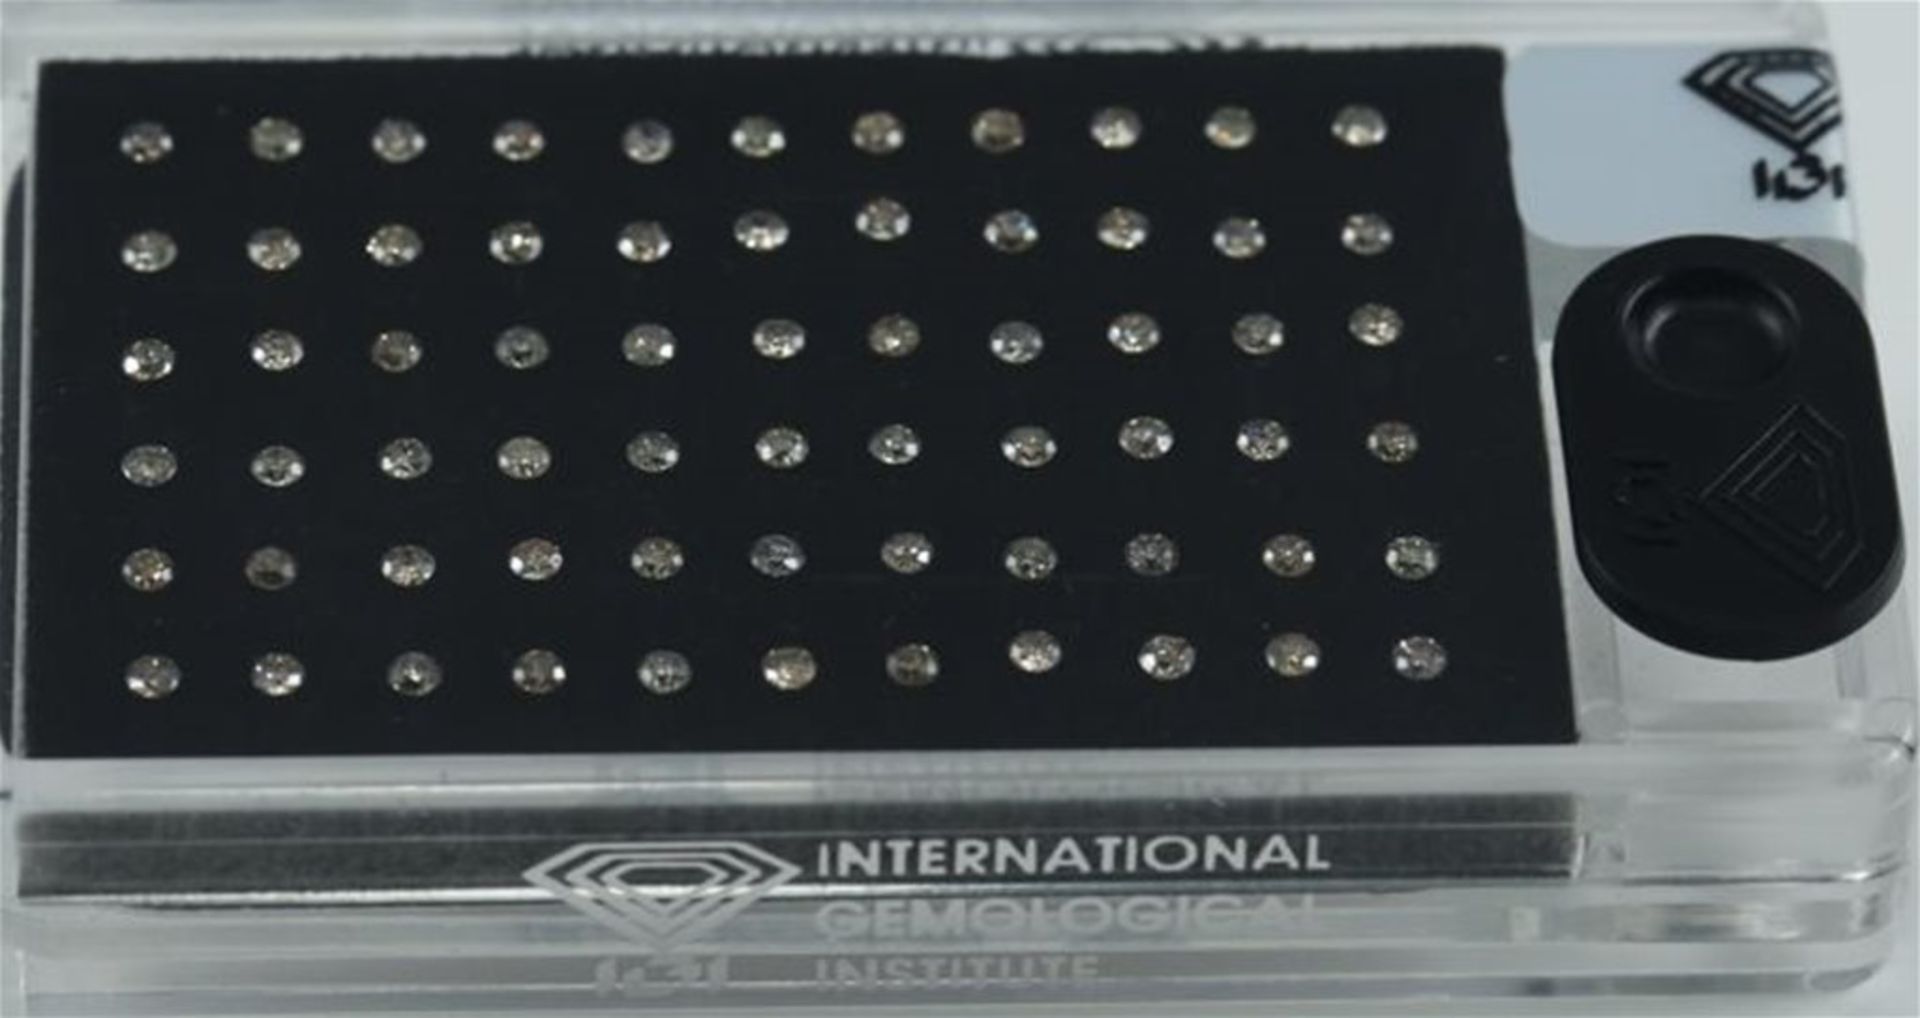 IGI Sealed 1.73 ct. “Diamond D-Box” - Light Brown - Image 2 of 4